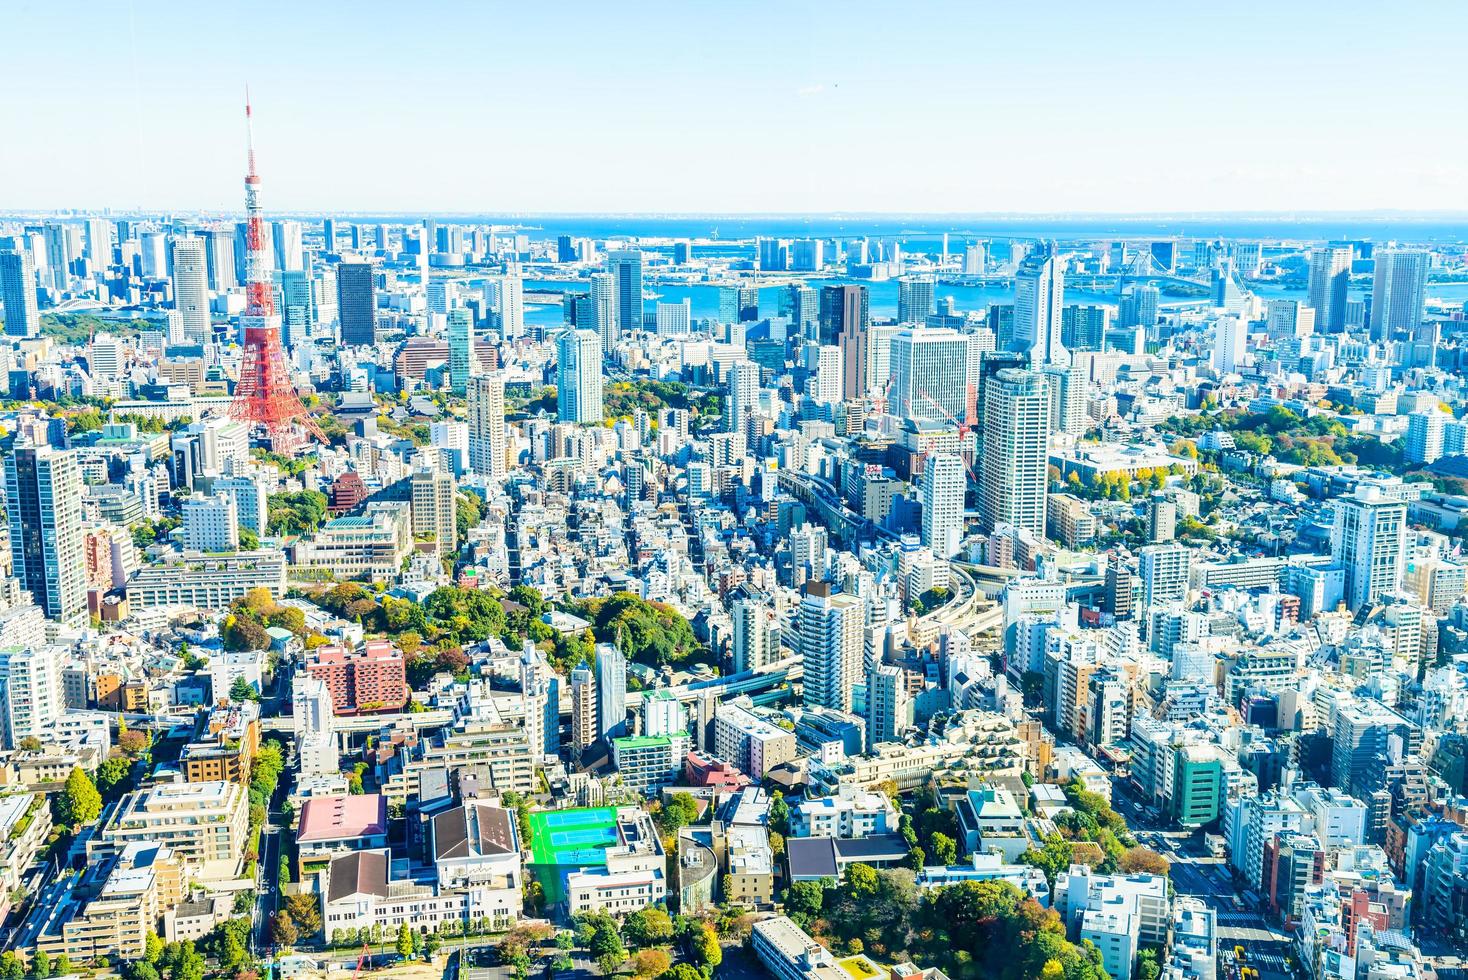 paisaje urbano de tokio en japón foto